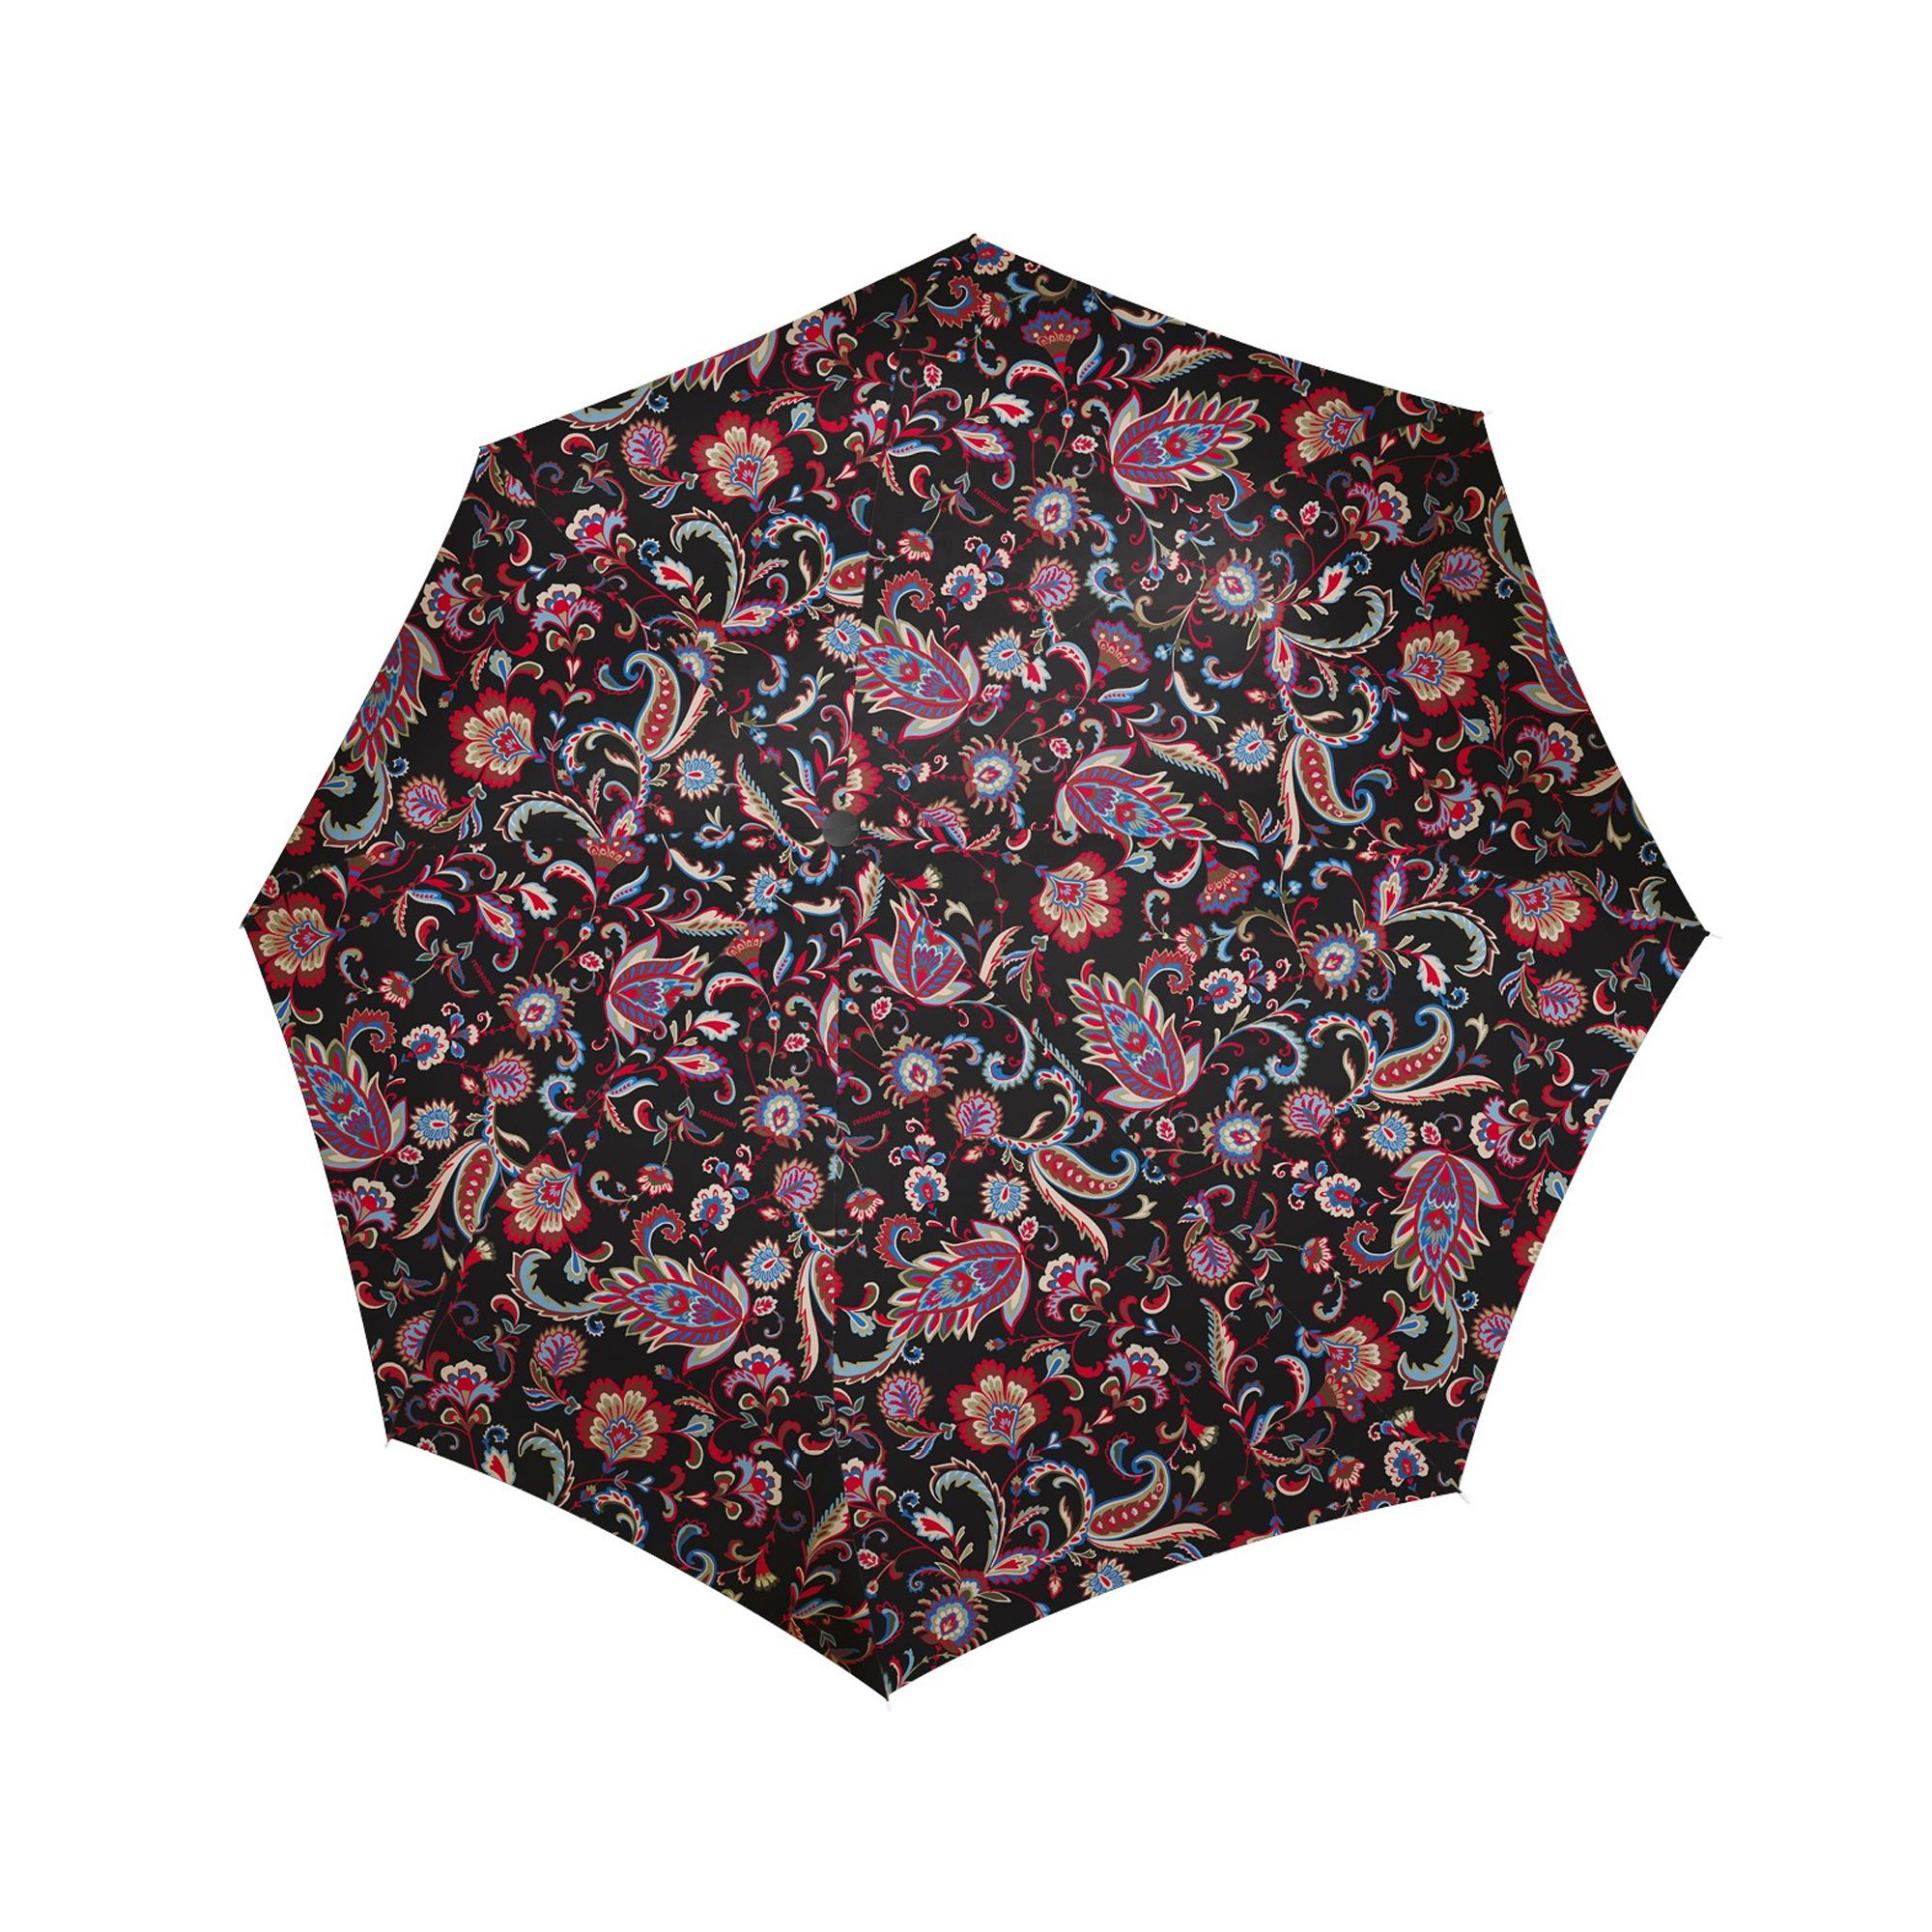 reisenthel - umbrella pocket duomatic - paisley black